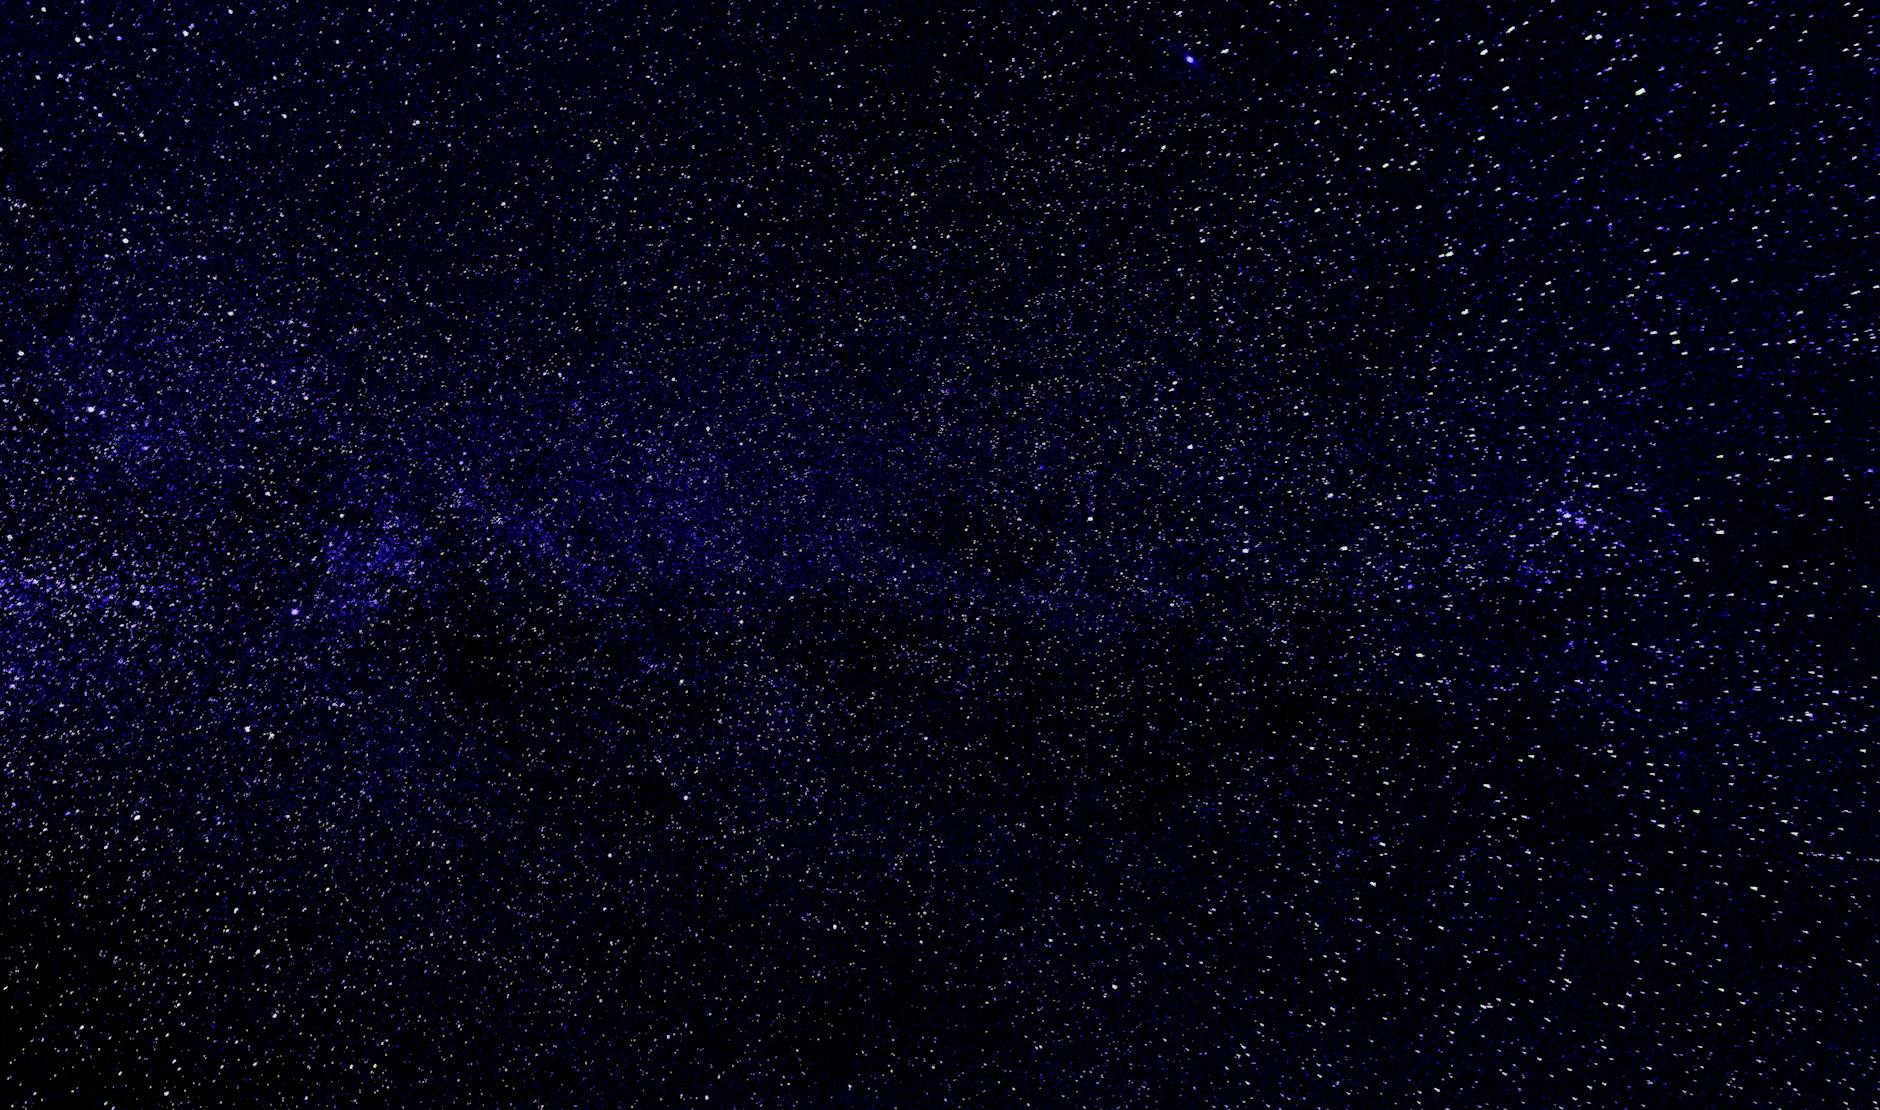 sky with stars illustration